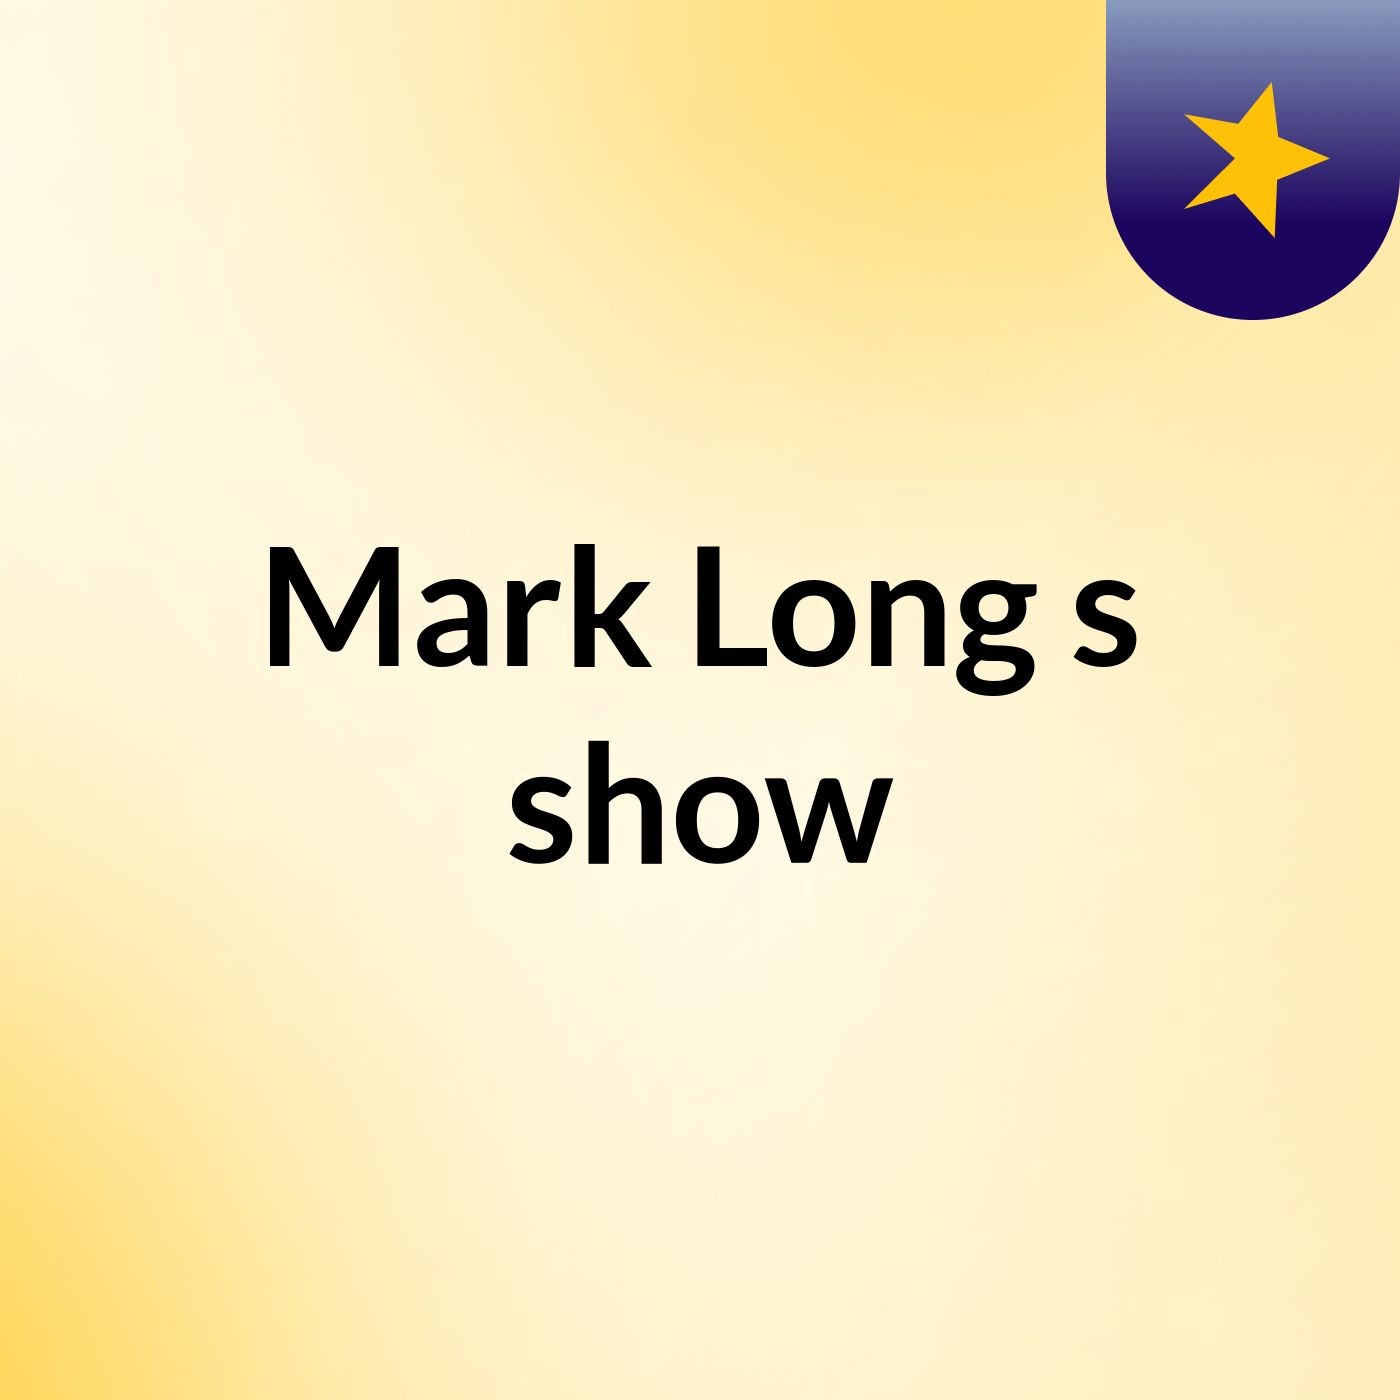 Mark Long's show